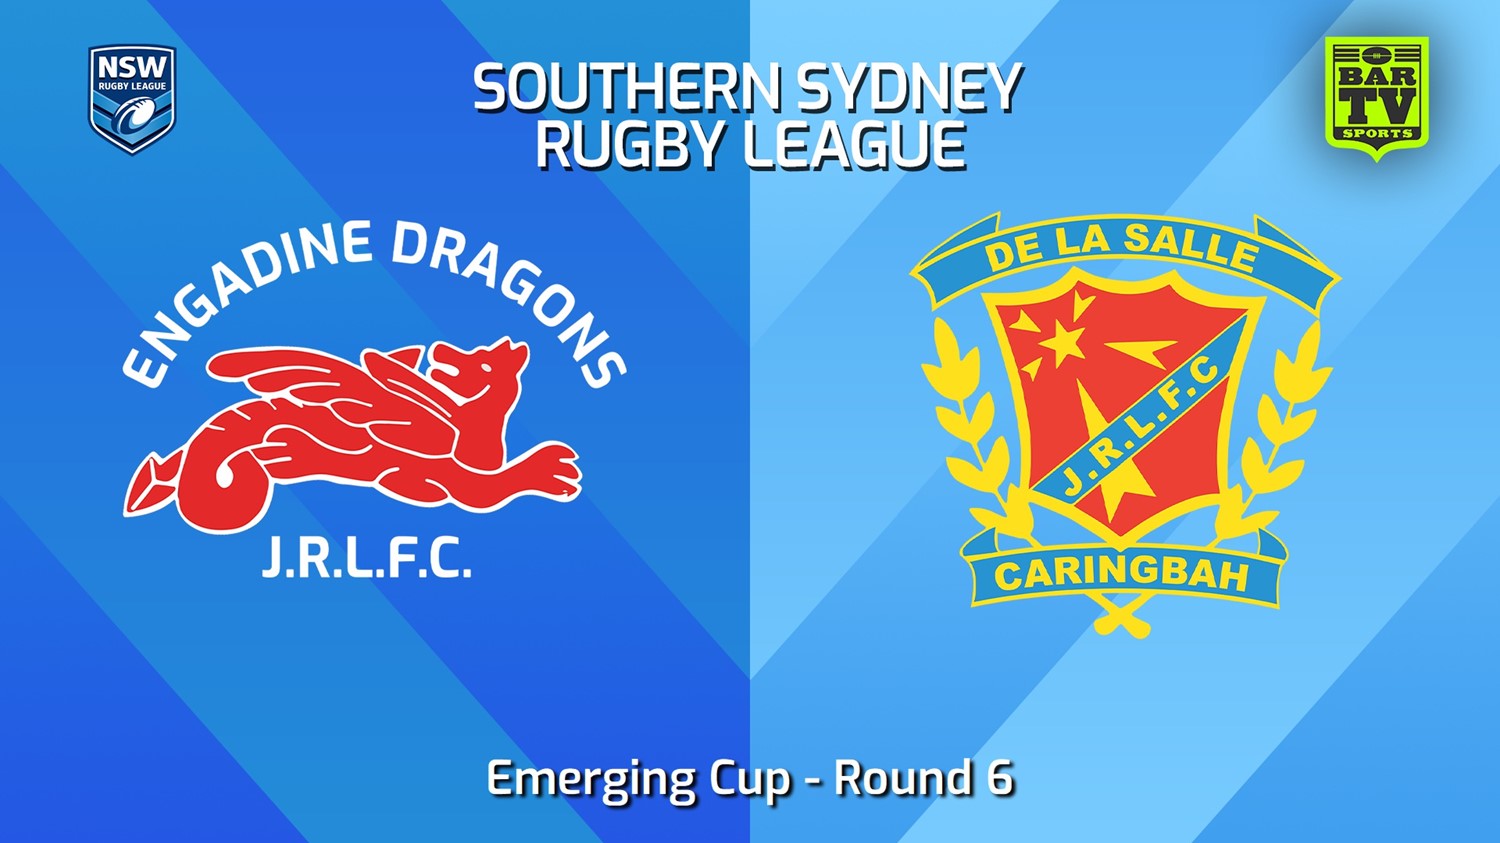 240525-video-S. Sydney Open Round 6 - Emerging Cup - Engadine Dragons v De La Salle Slate Image